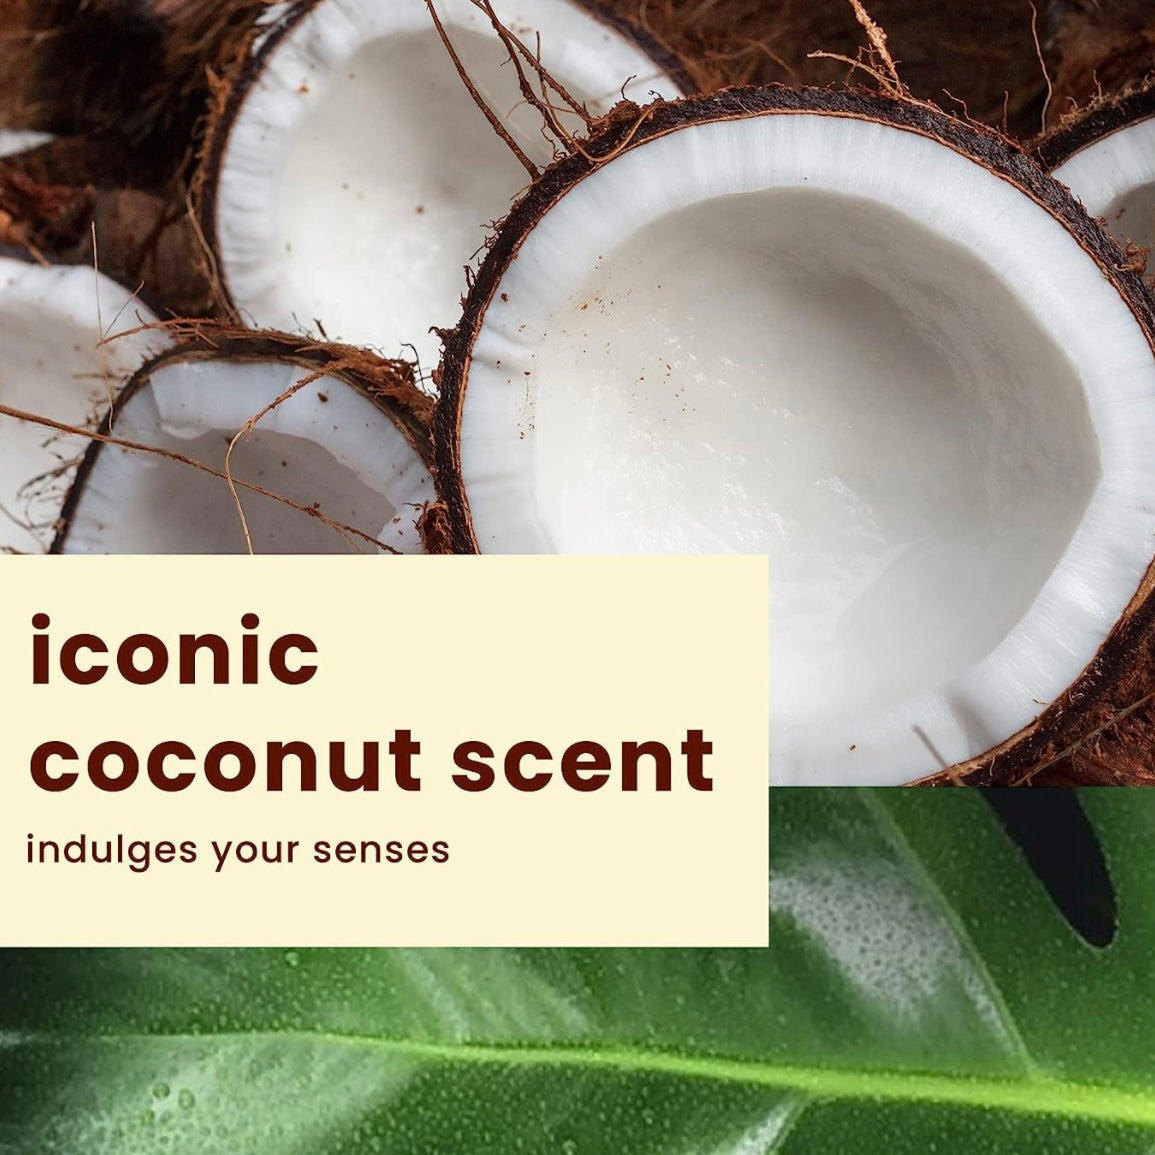 Hawaiian Tropic Exotic Coconut After Sun Creamy Body Butter 8oz.